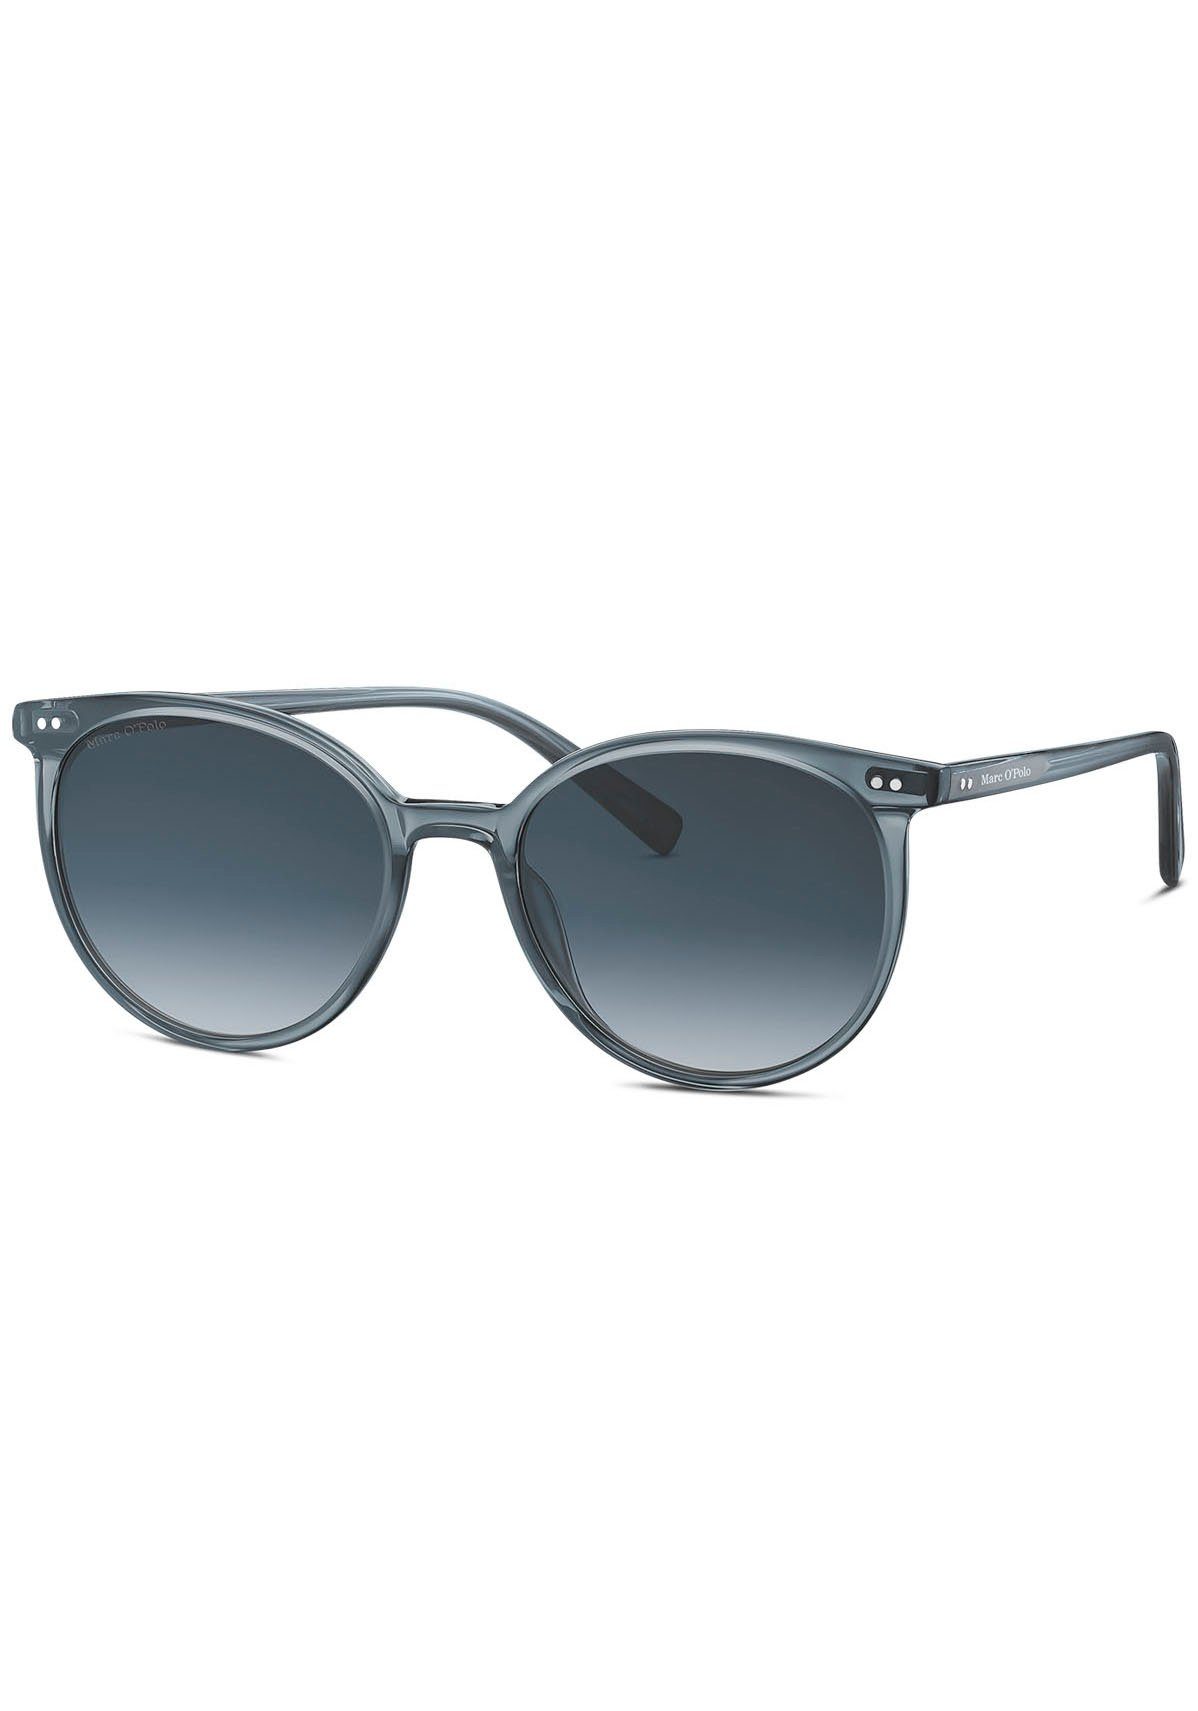 Marc O'Polo Sonnenbrille 506164 Panto-Form Modell grau